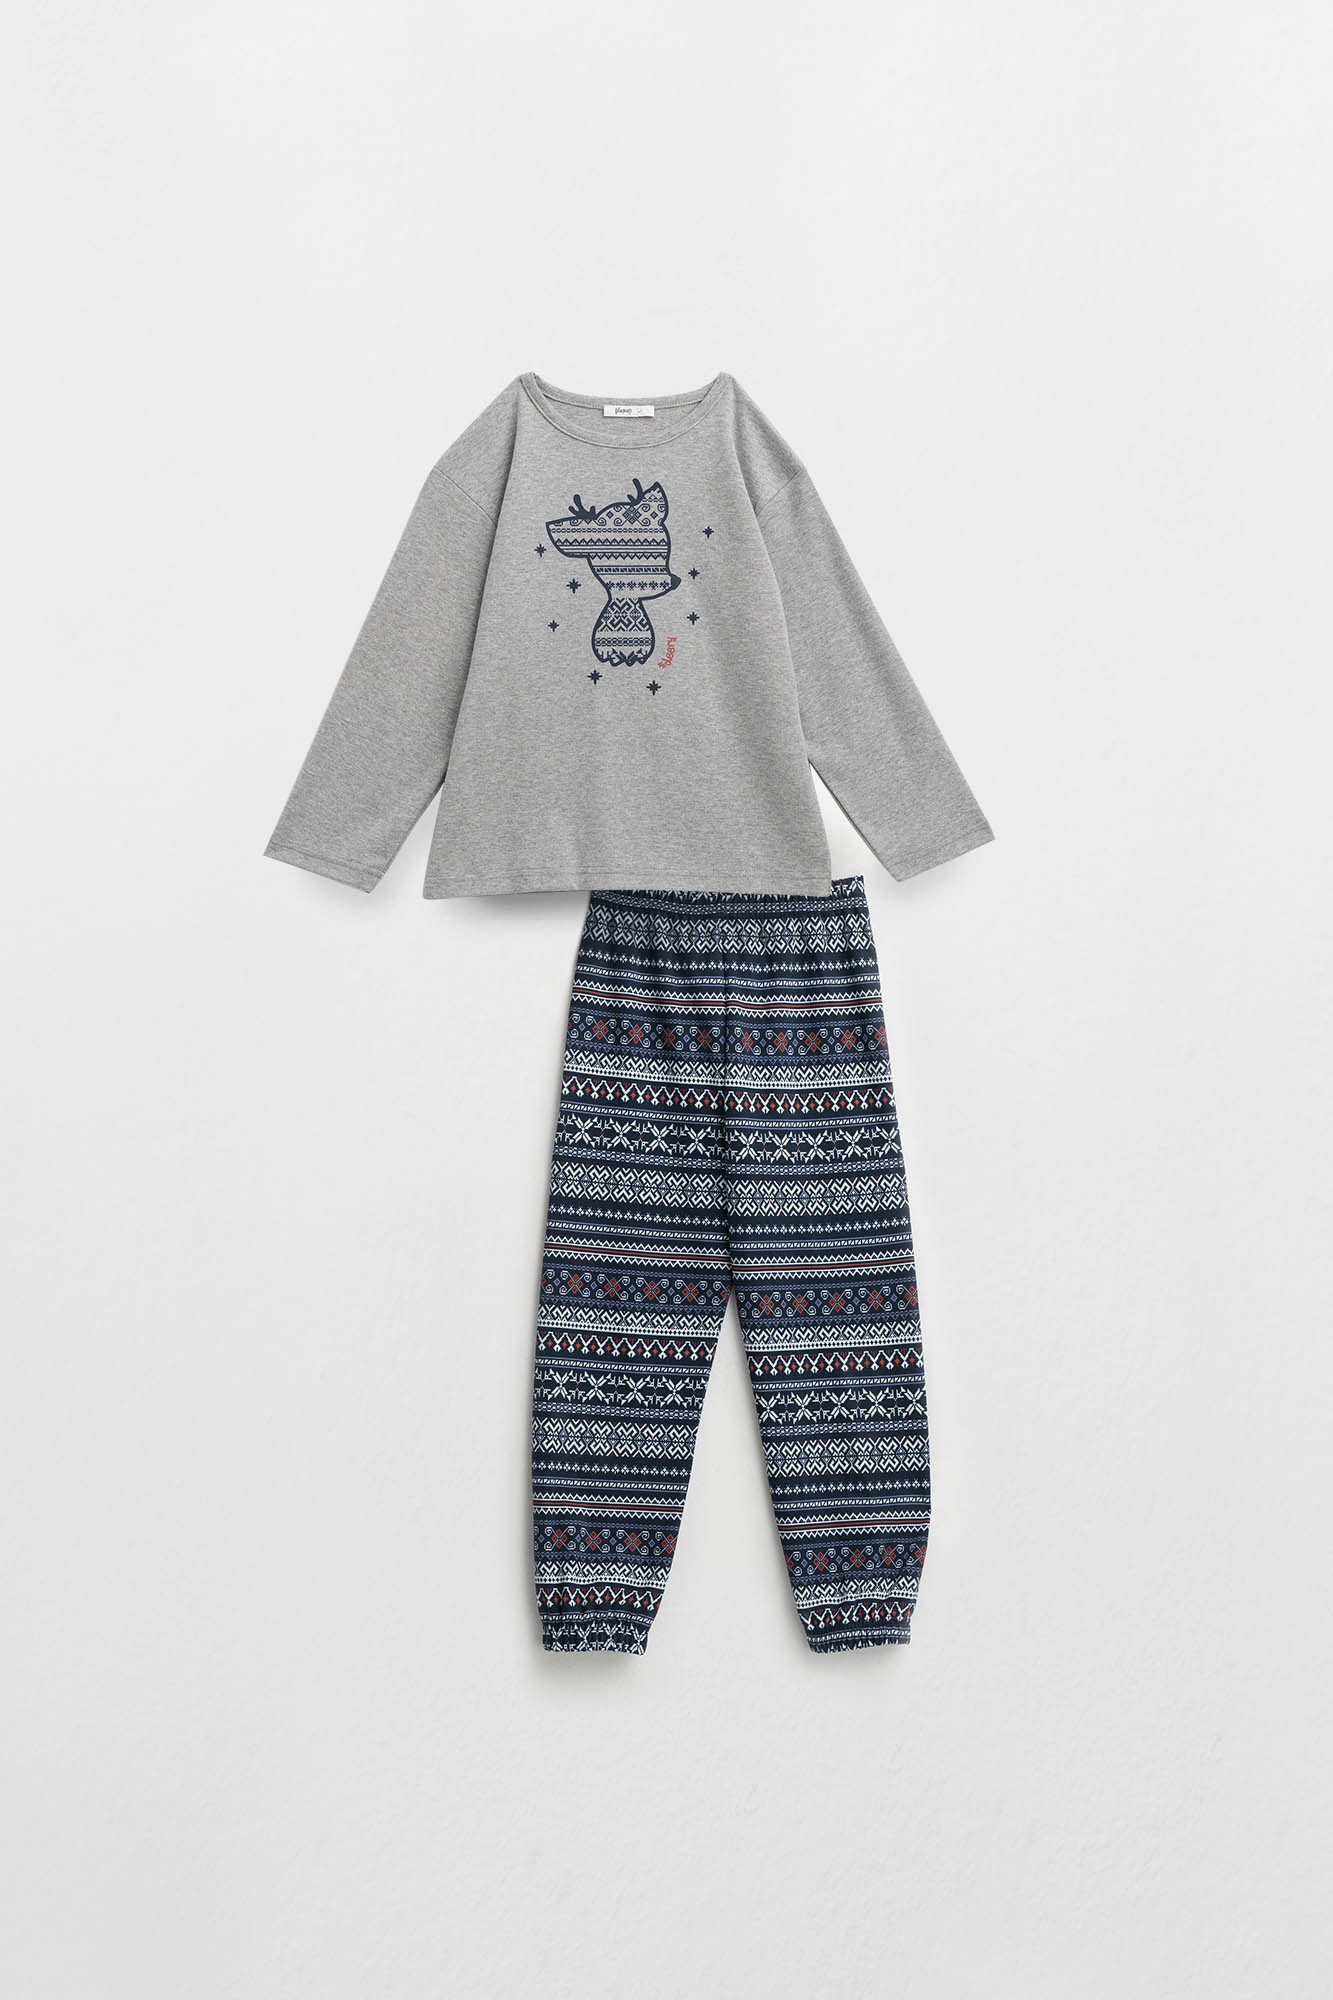 Vamp - Dvoudílné dětské pyžamo - Darby 17576 - Vamp gray melange 12